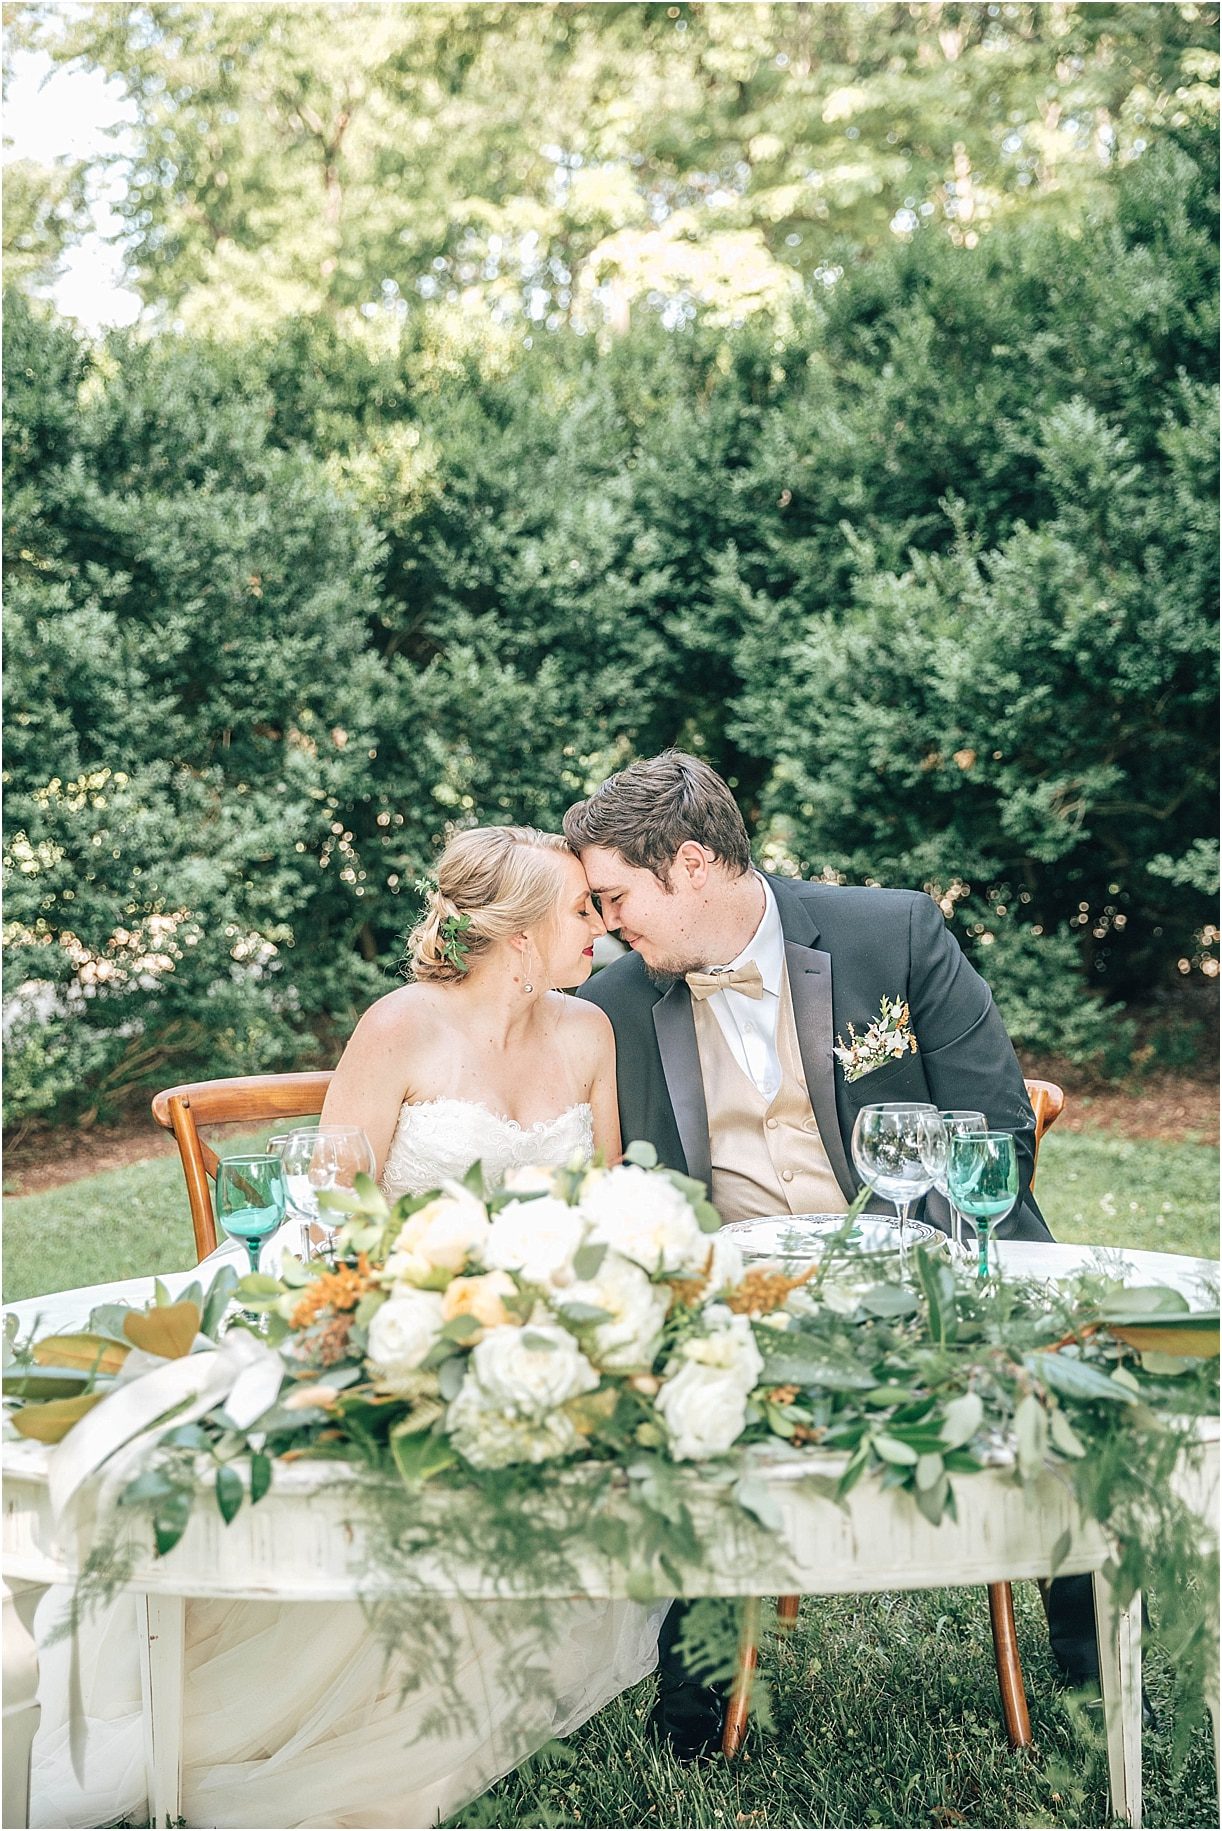 An Intimate Secret Garden Wedding in Virginia | Hill City Bride Virginia Wedding Inspiration Blog Groom Sweetheart Table